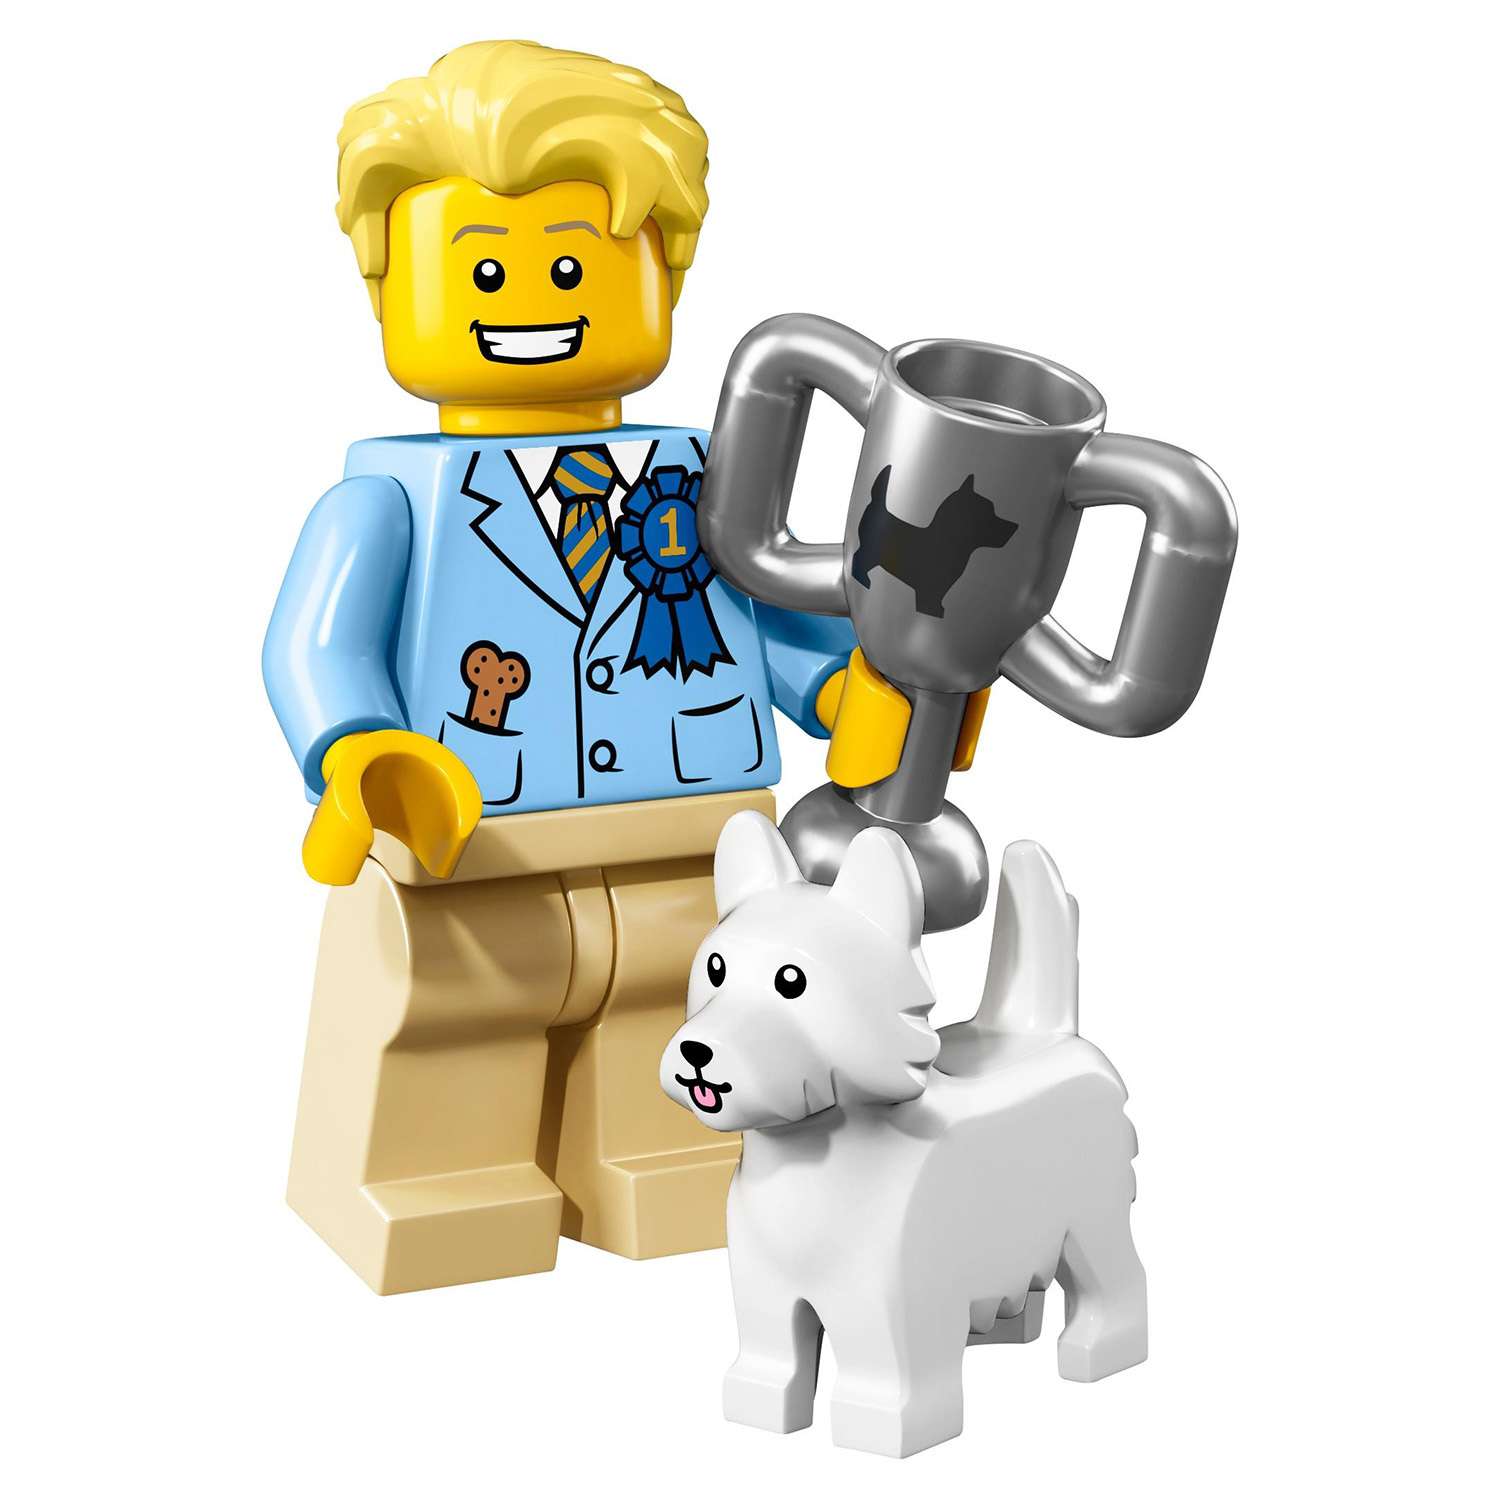 Конструктор LEGO Minifigures Confidential Minifigures Sept. 2016 (71013) - фото 19